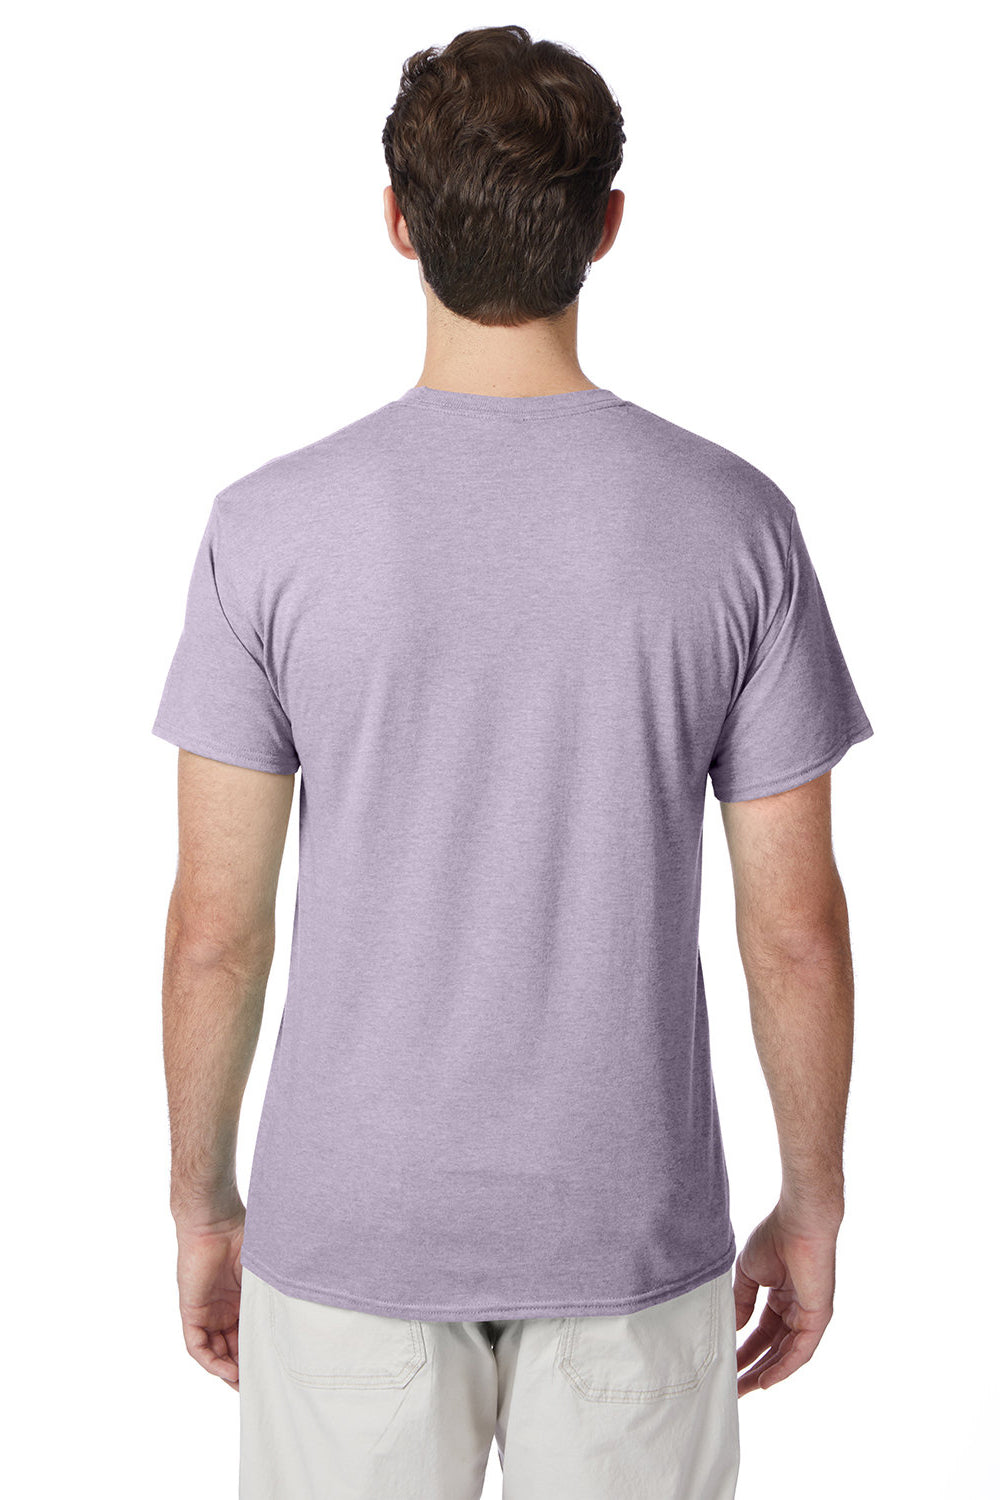 Hanes 42TB Mens X-Temp FreshIQ Moisture Wicking Short Sleeve Crewneck T-Shirt Heather Pale Violet Purple Back